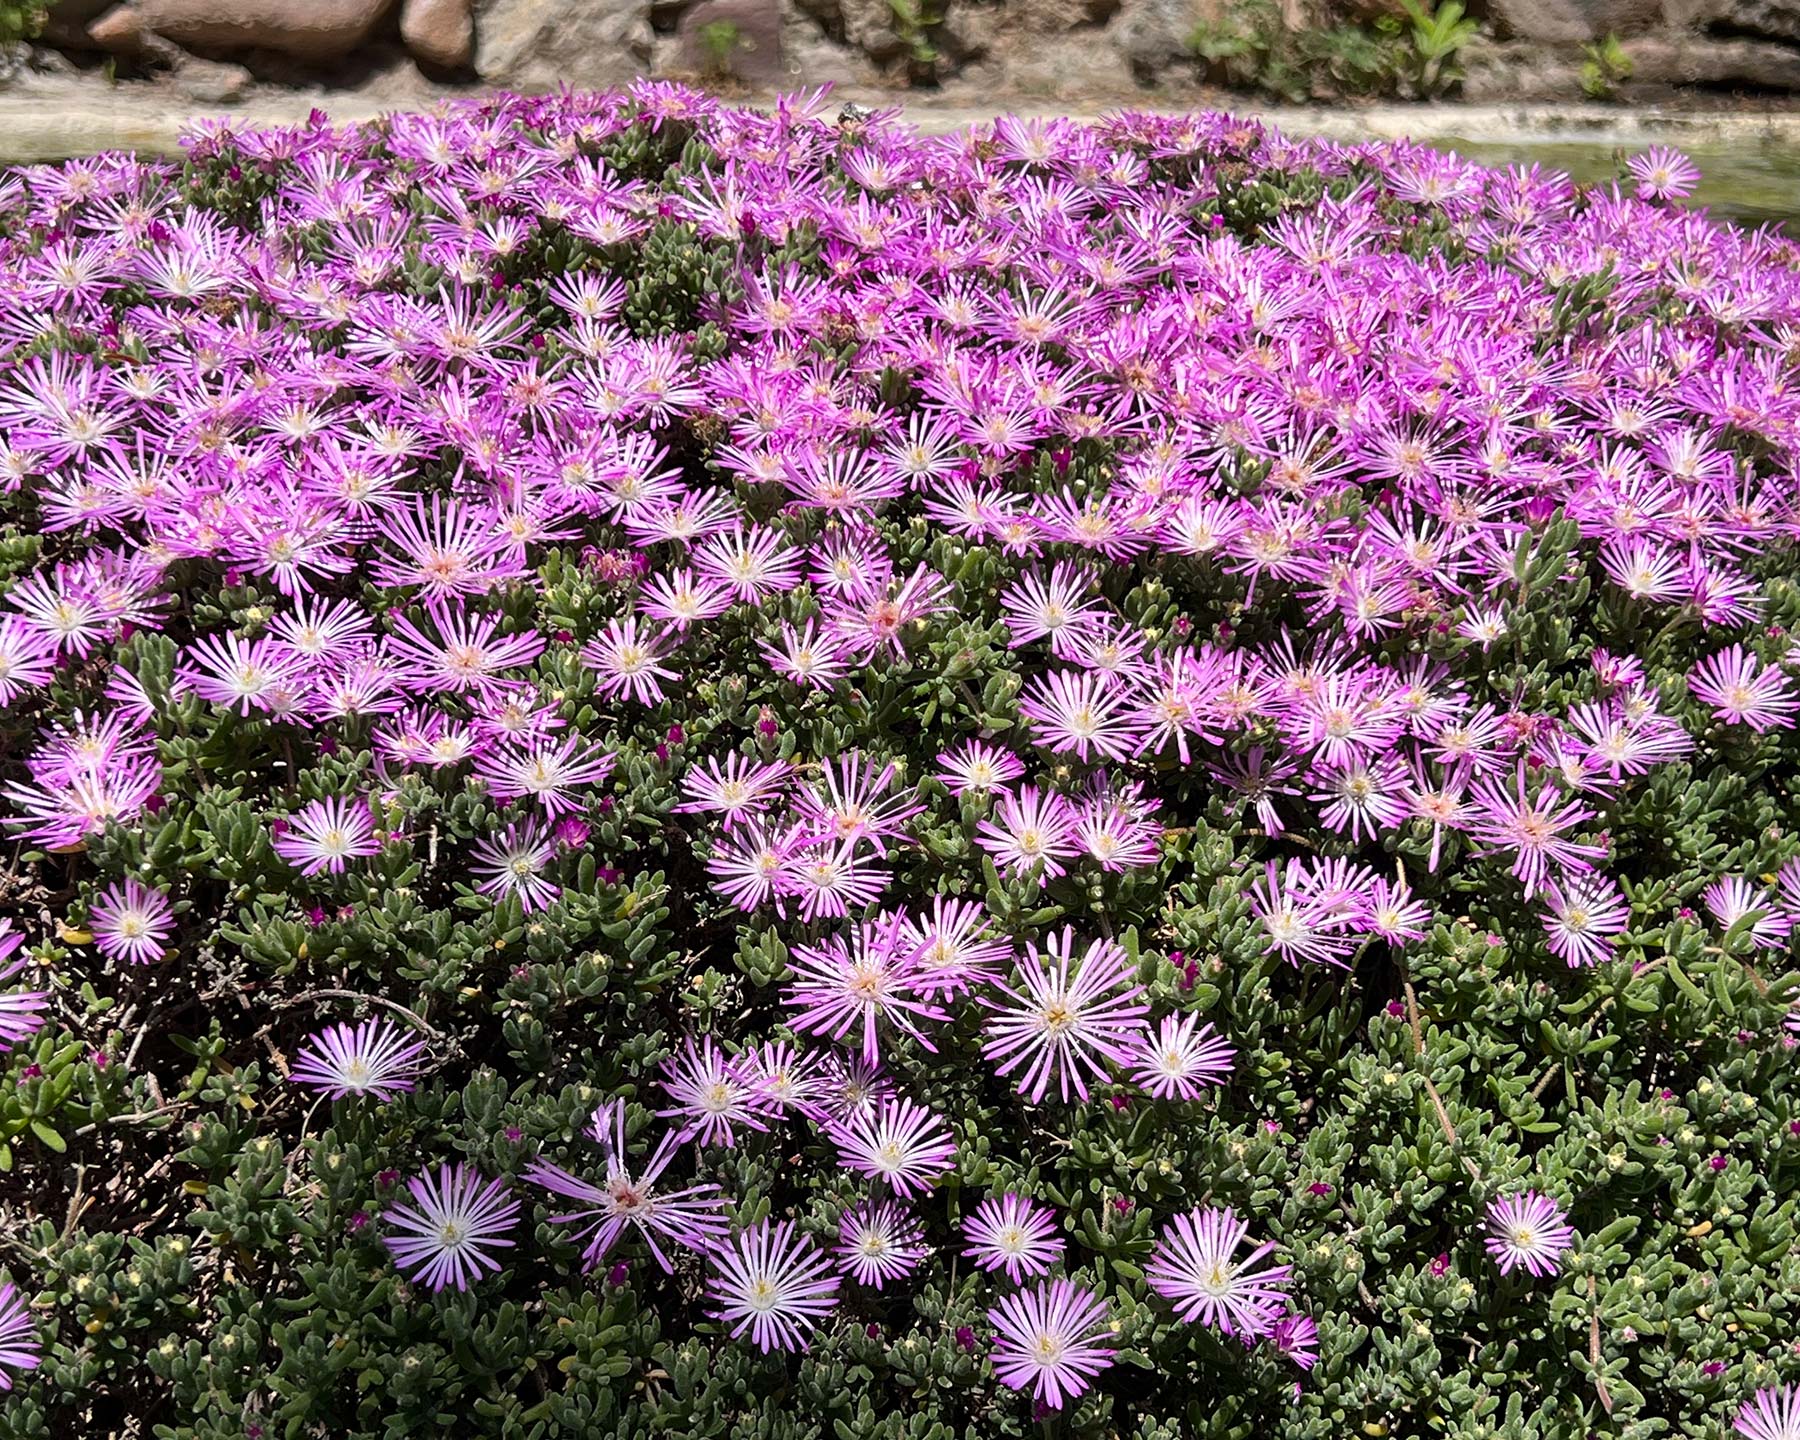 Drosanthemum floribundum syn D. candens - Ice Plant has pink daisy link flowers